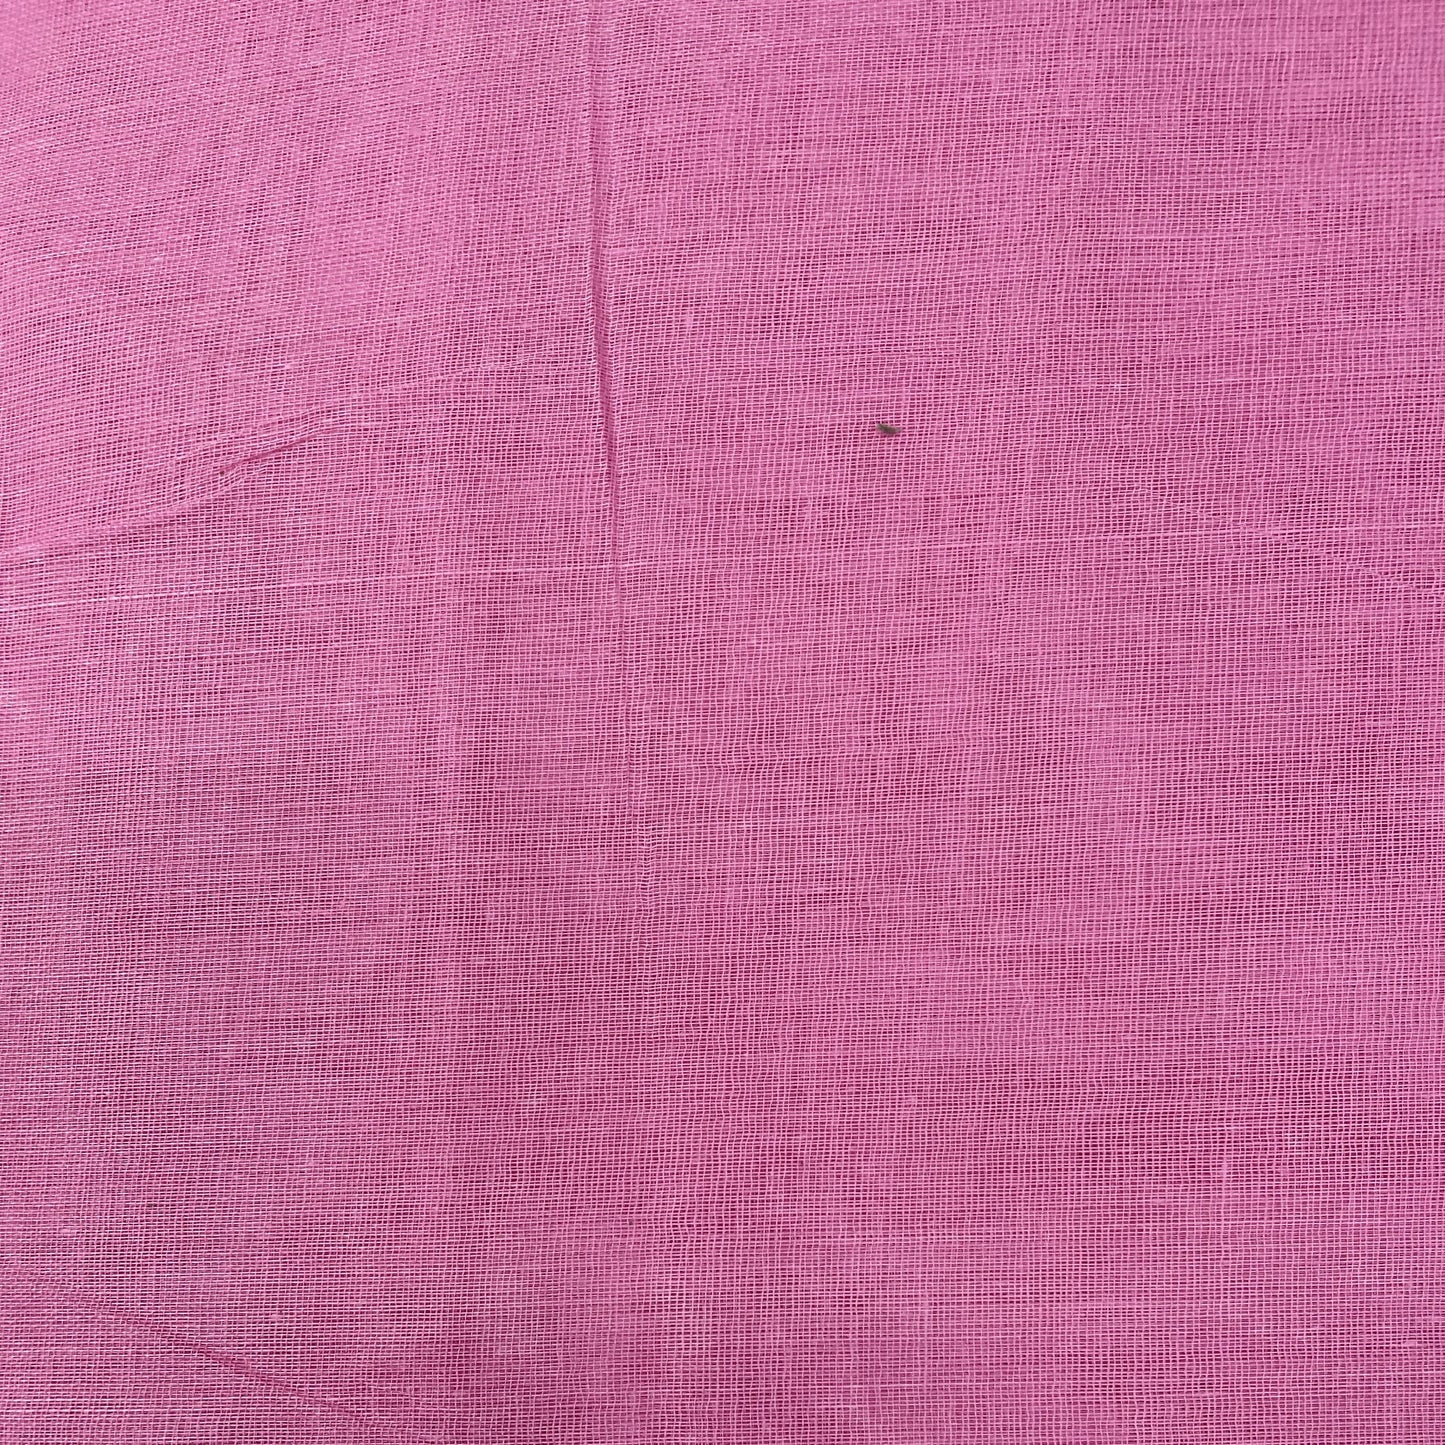 Taffy Pink Solid Cotton Lining Fabric - TradeUNO